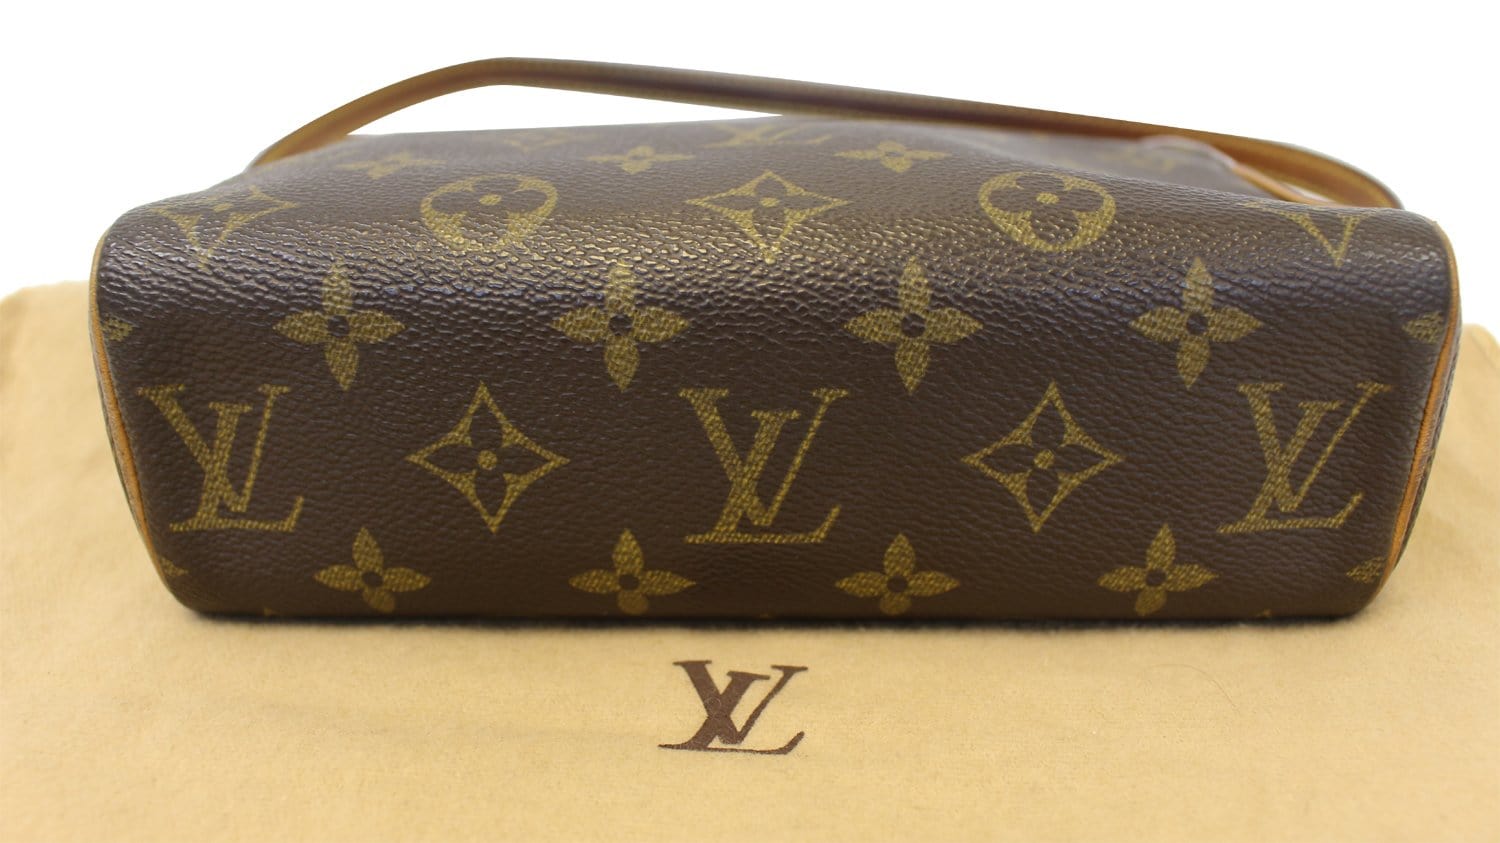 Louis Vuitton - Authenticated Recital Handbag - Leather Brown Plain for Women, Good Condition